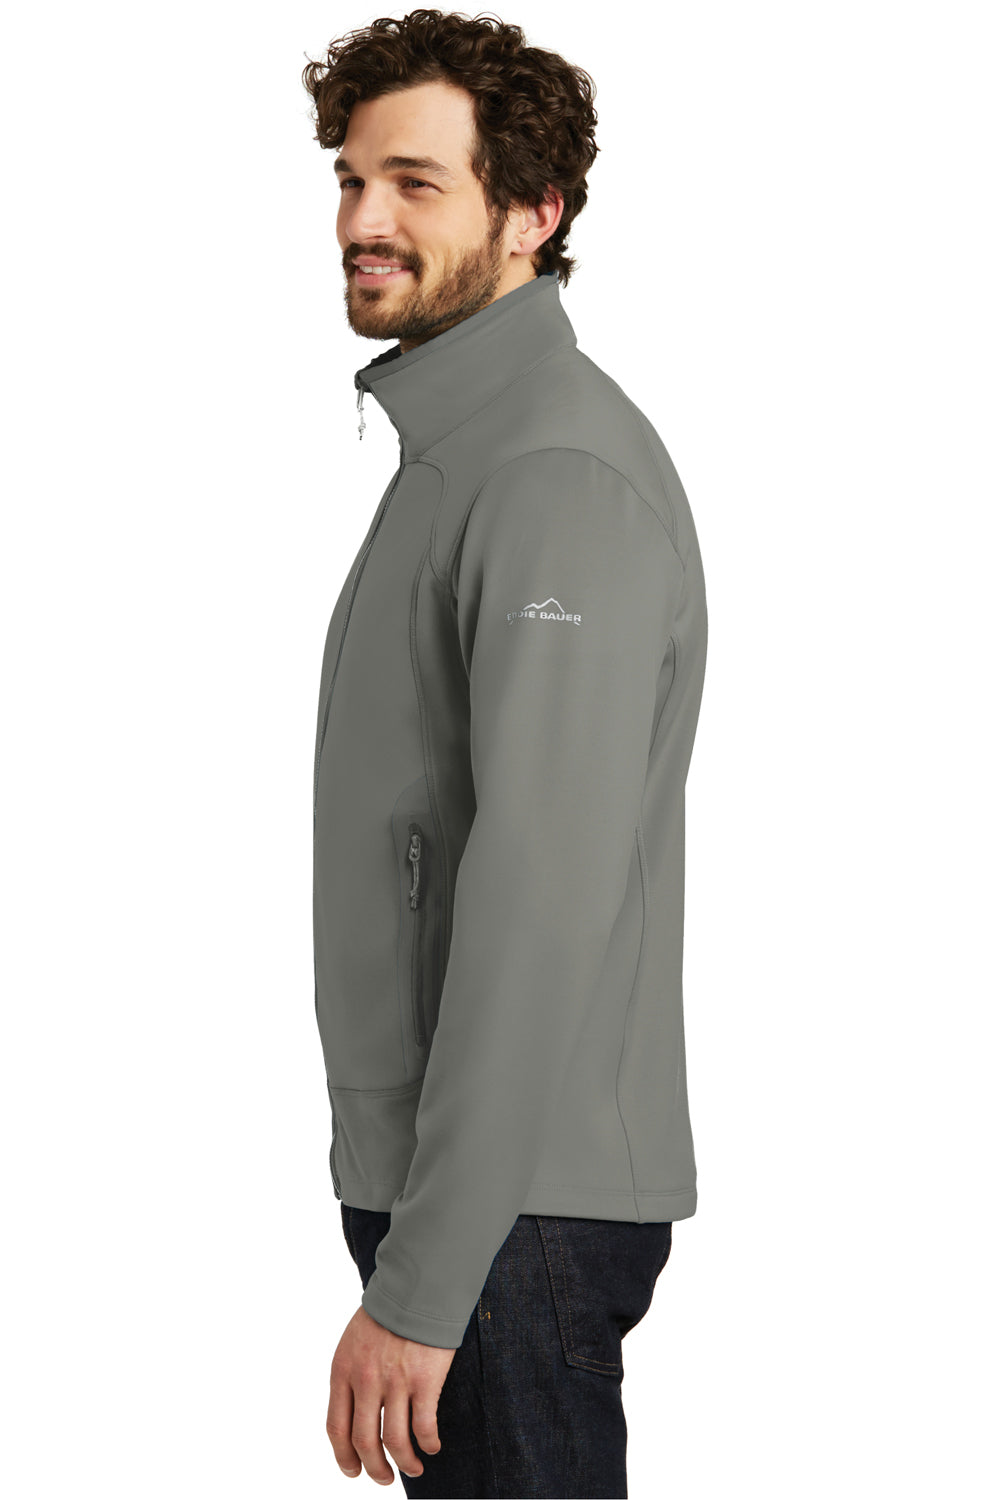 Eddie Bauer EB240 Mens Highpoint Pill Resistant Fleece Full Zip Jacket Metal Grey Model Side